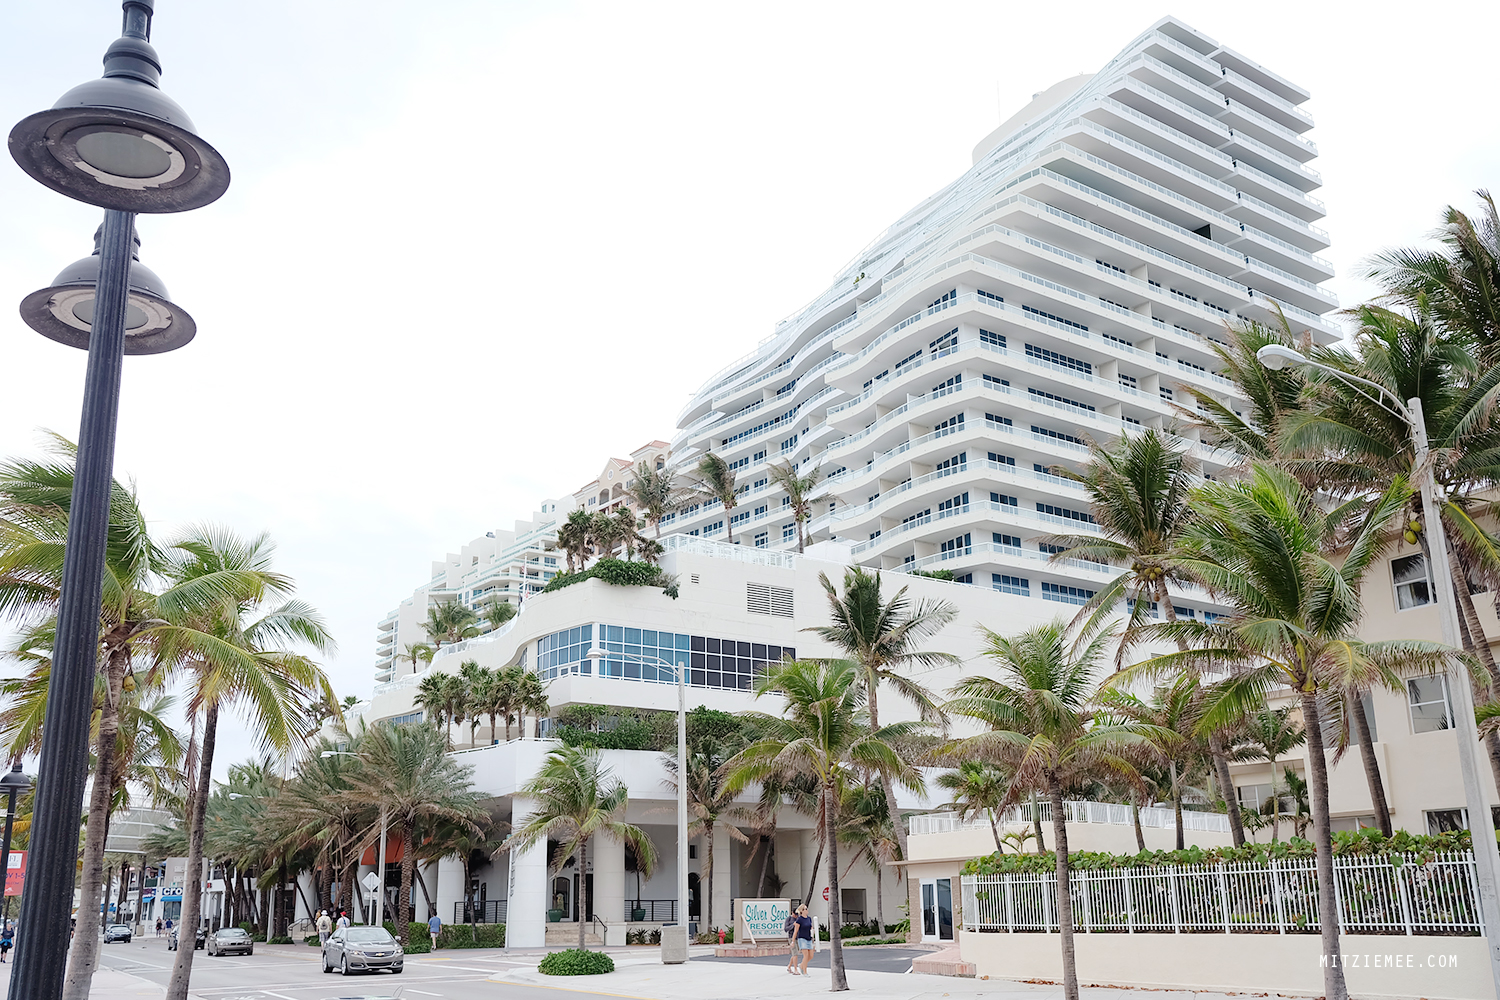 Ritz-Carlton Fort Lauderdale